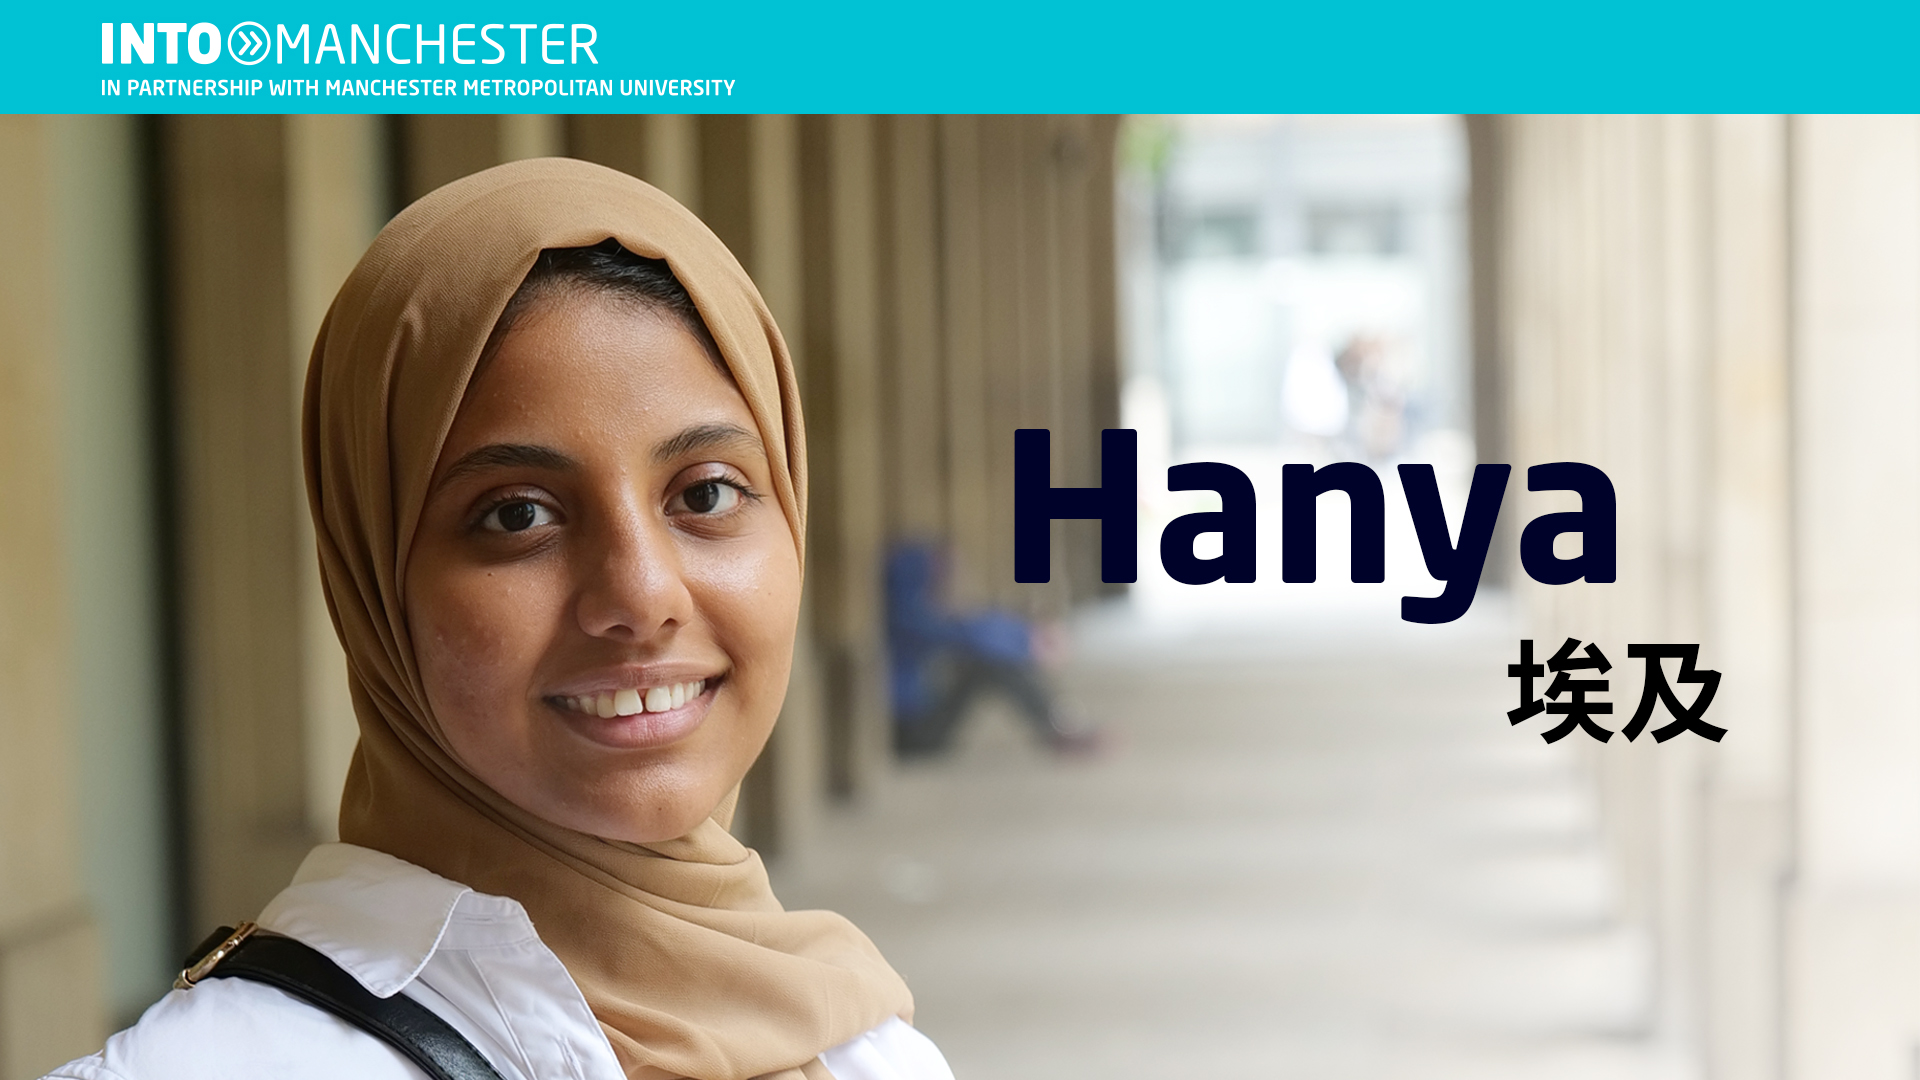  Alumni - Hanya from Egypt